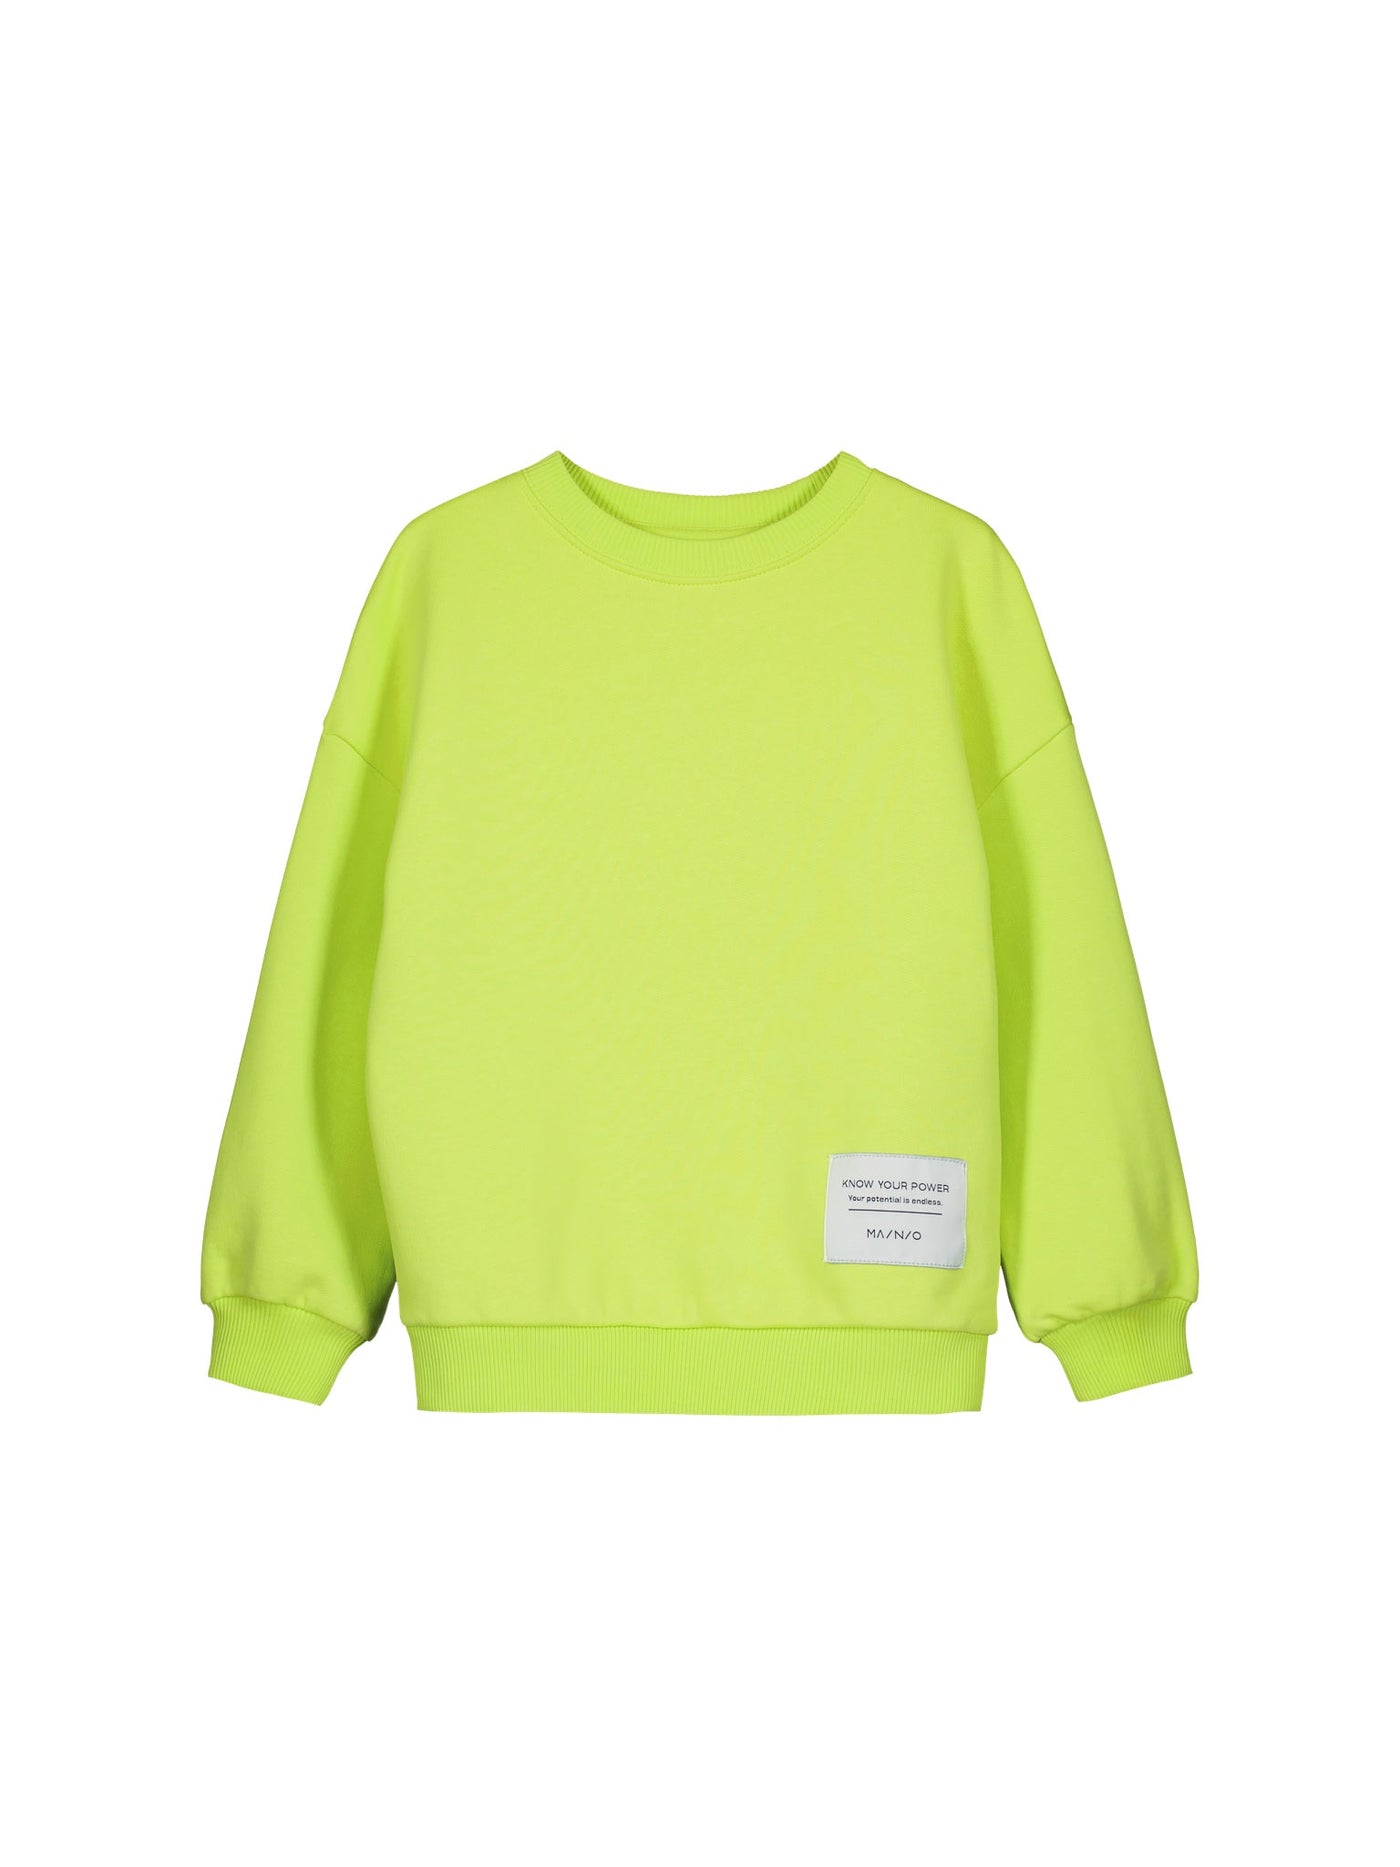 Mainio Superpower Sweatshirt - Lime